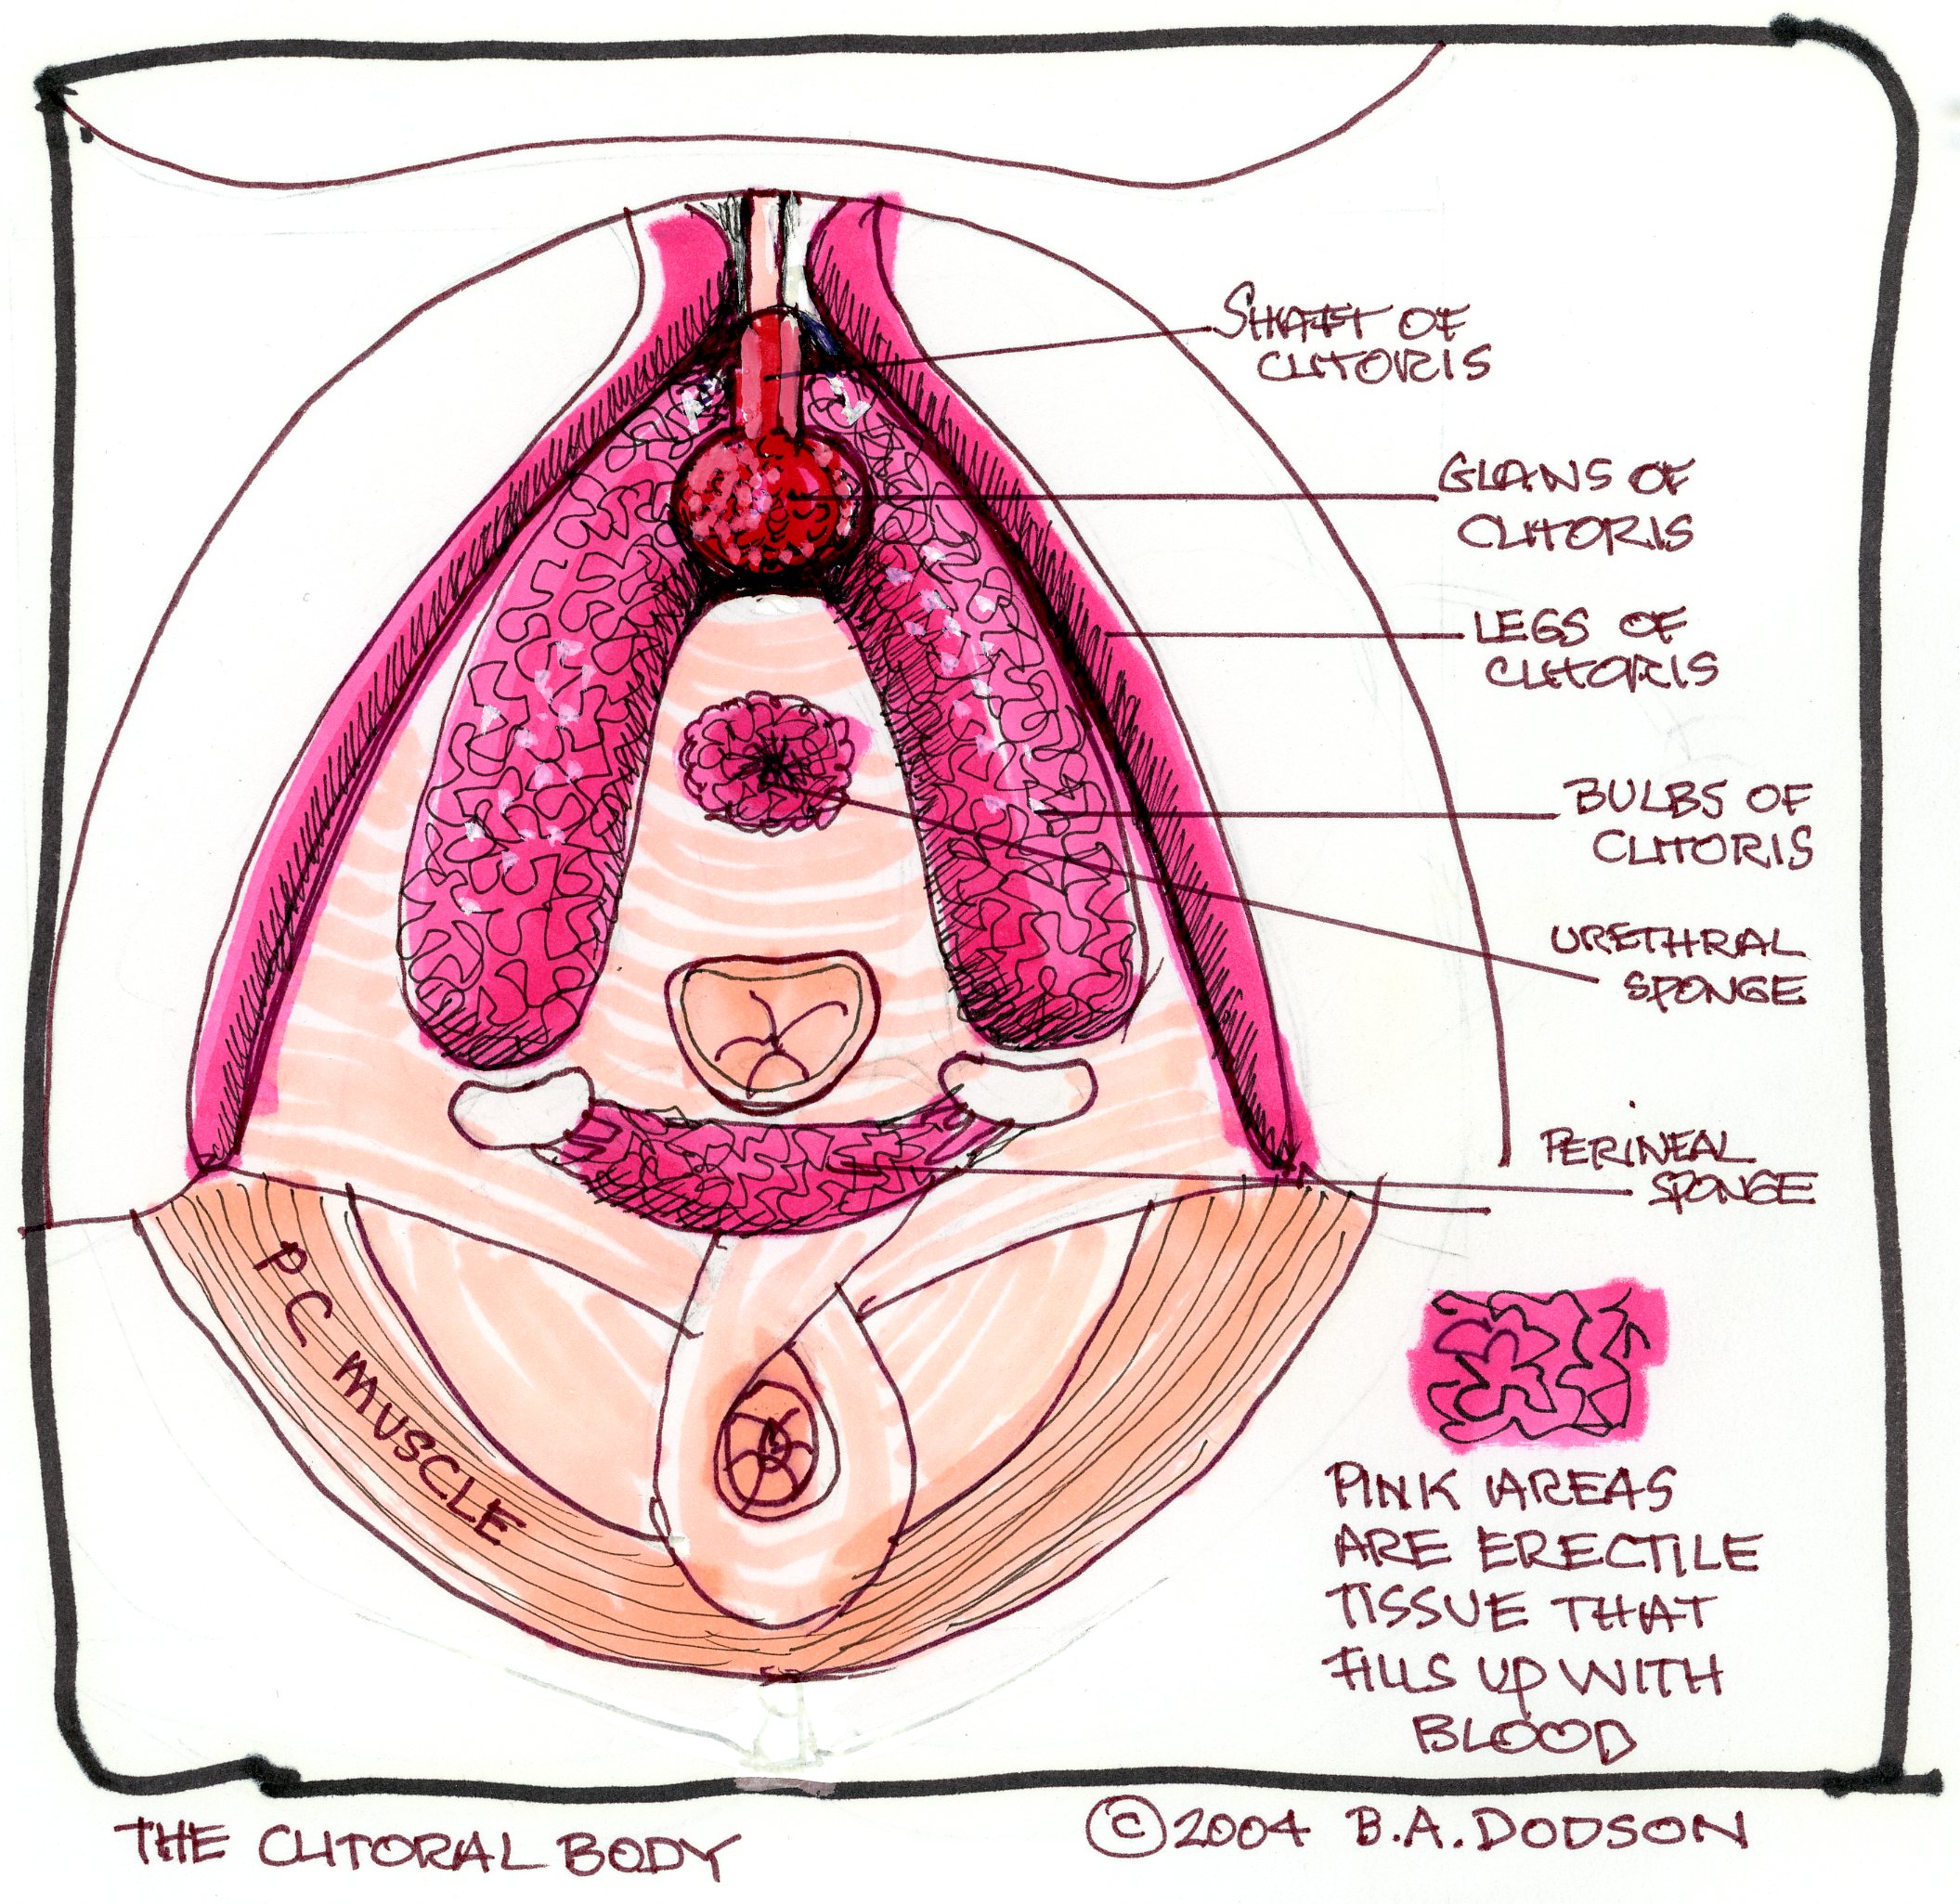 clitoral anatomy